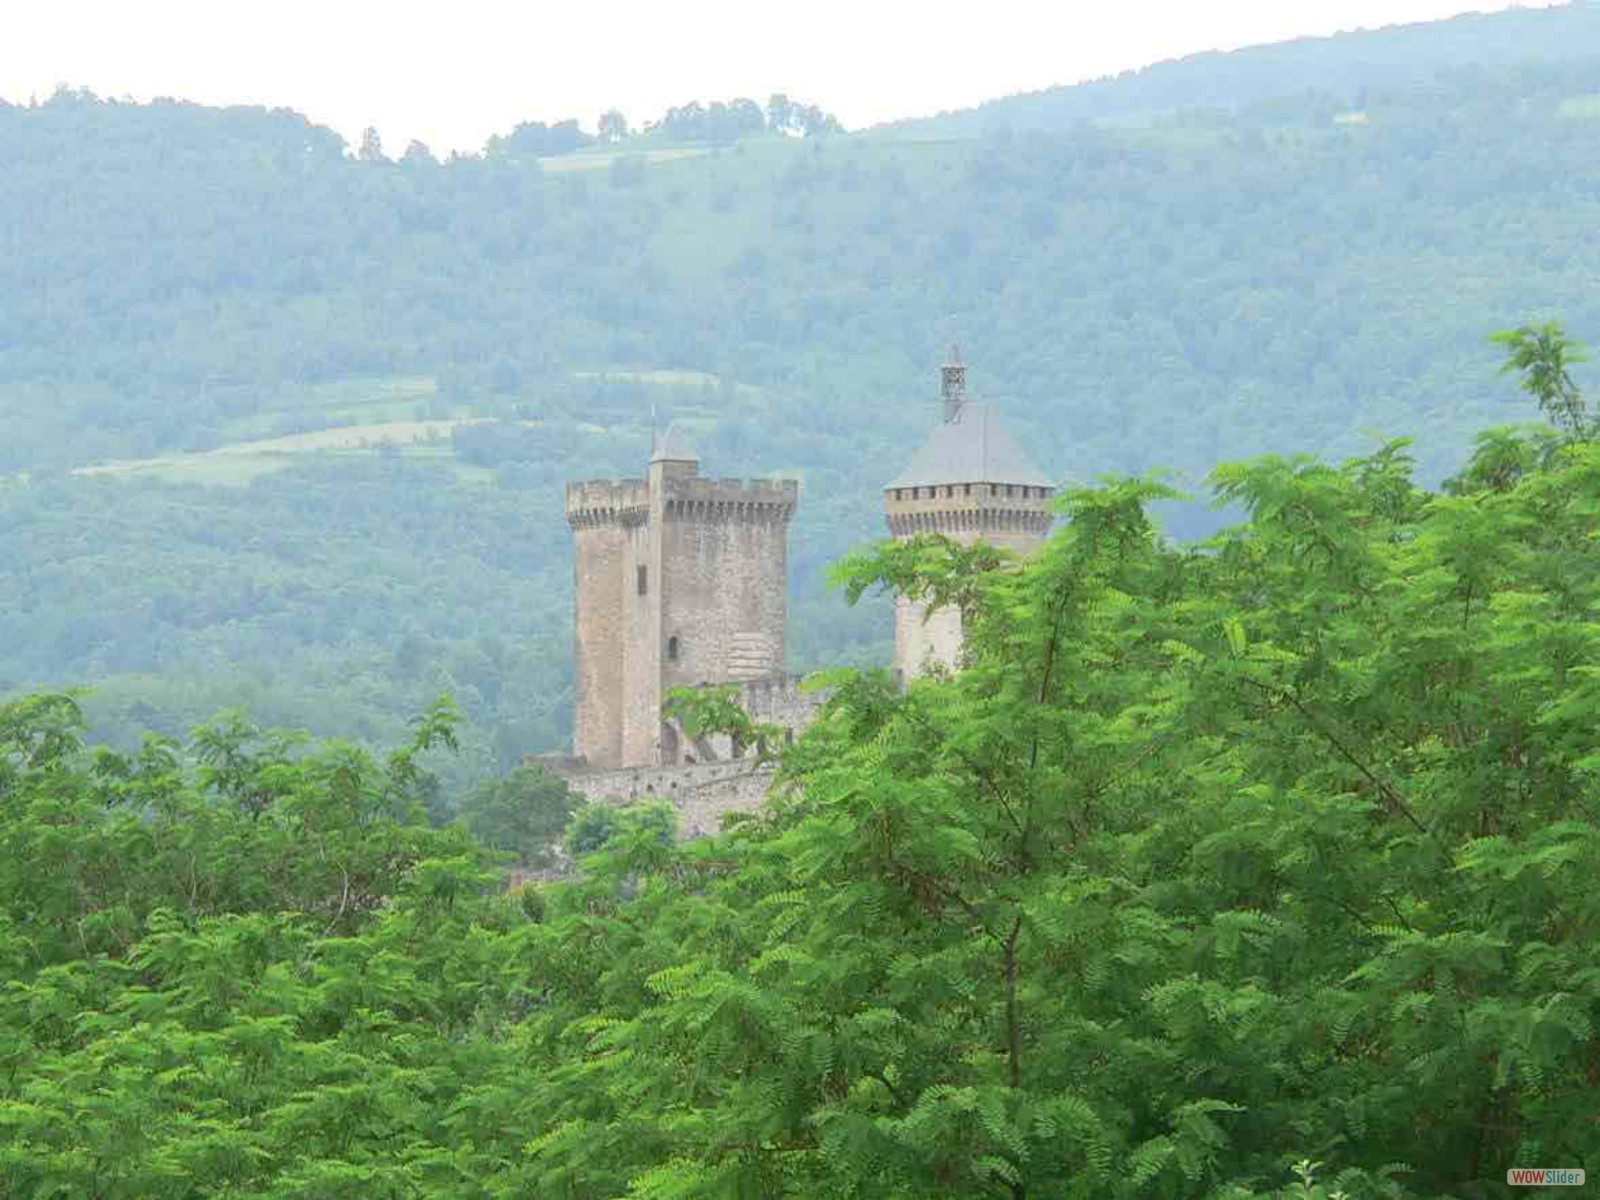  First View Of Foix